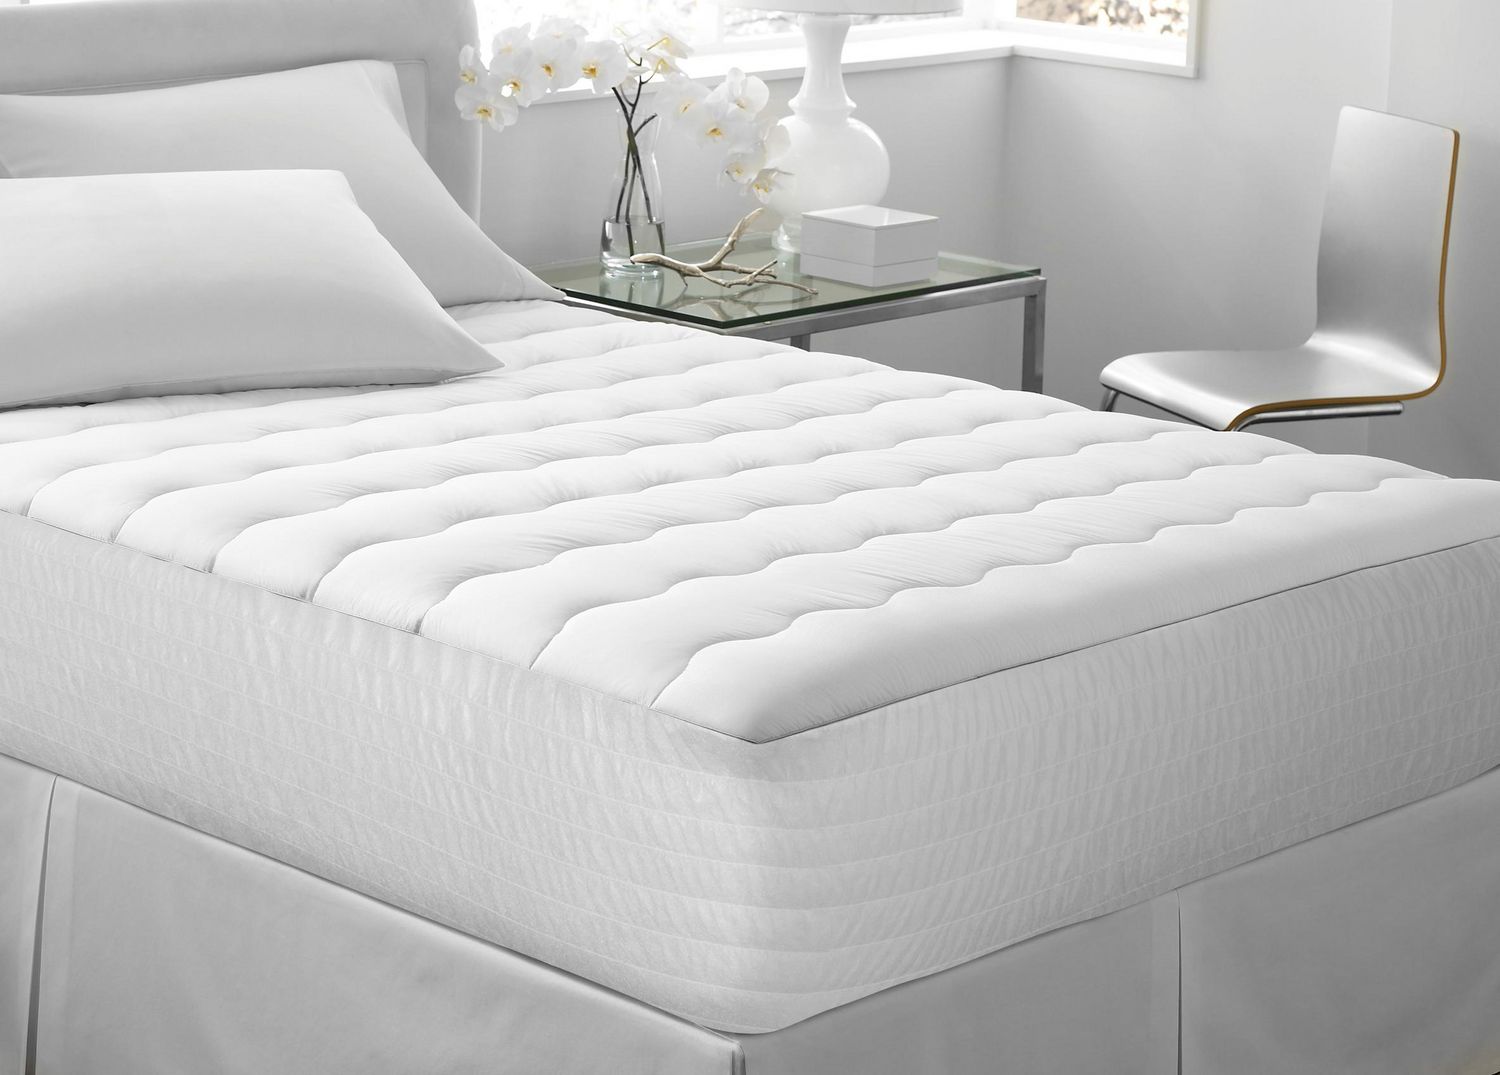 foam padding for mattress